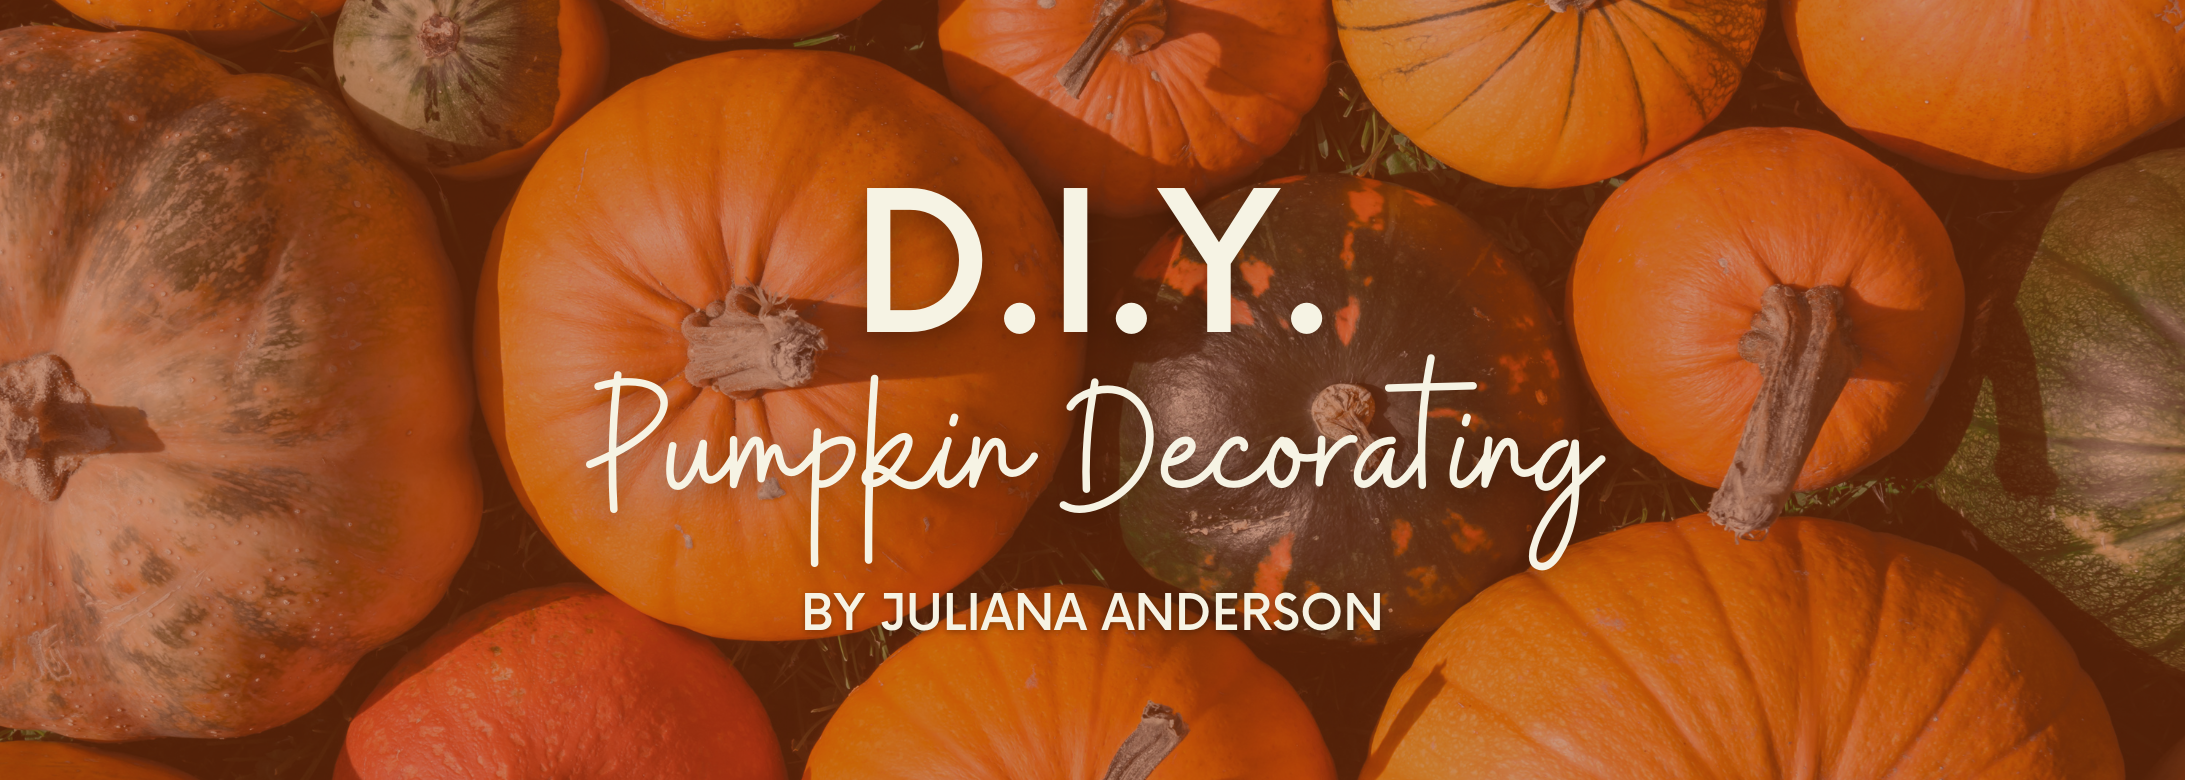 DIY Pumpkin Decorating blog cover